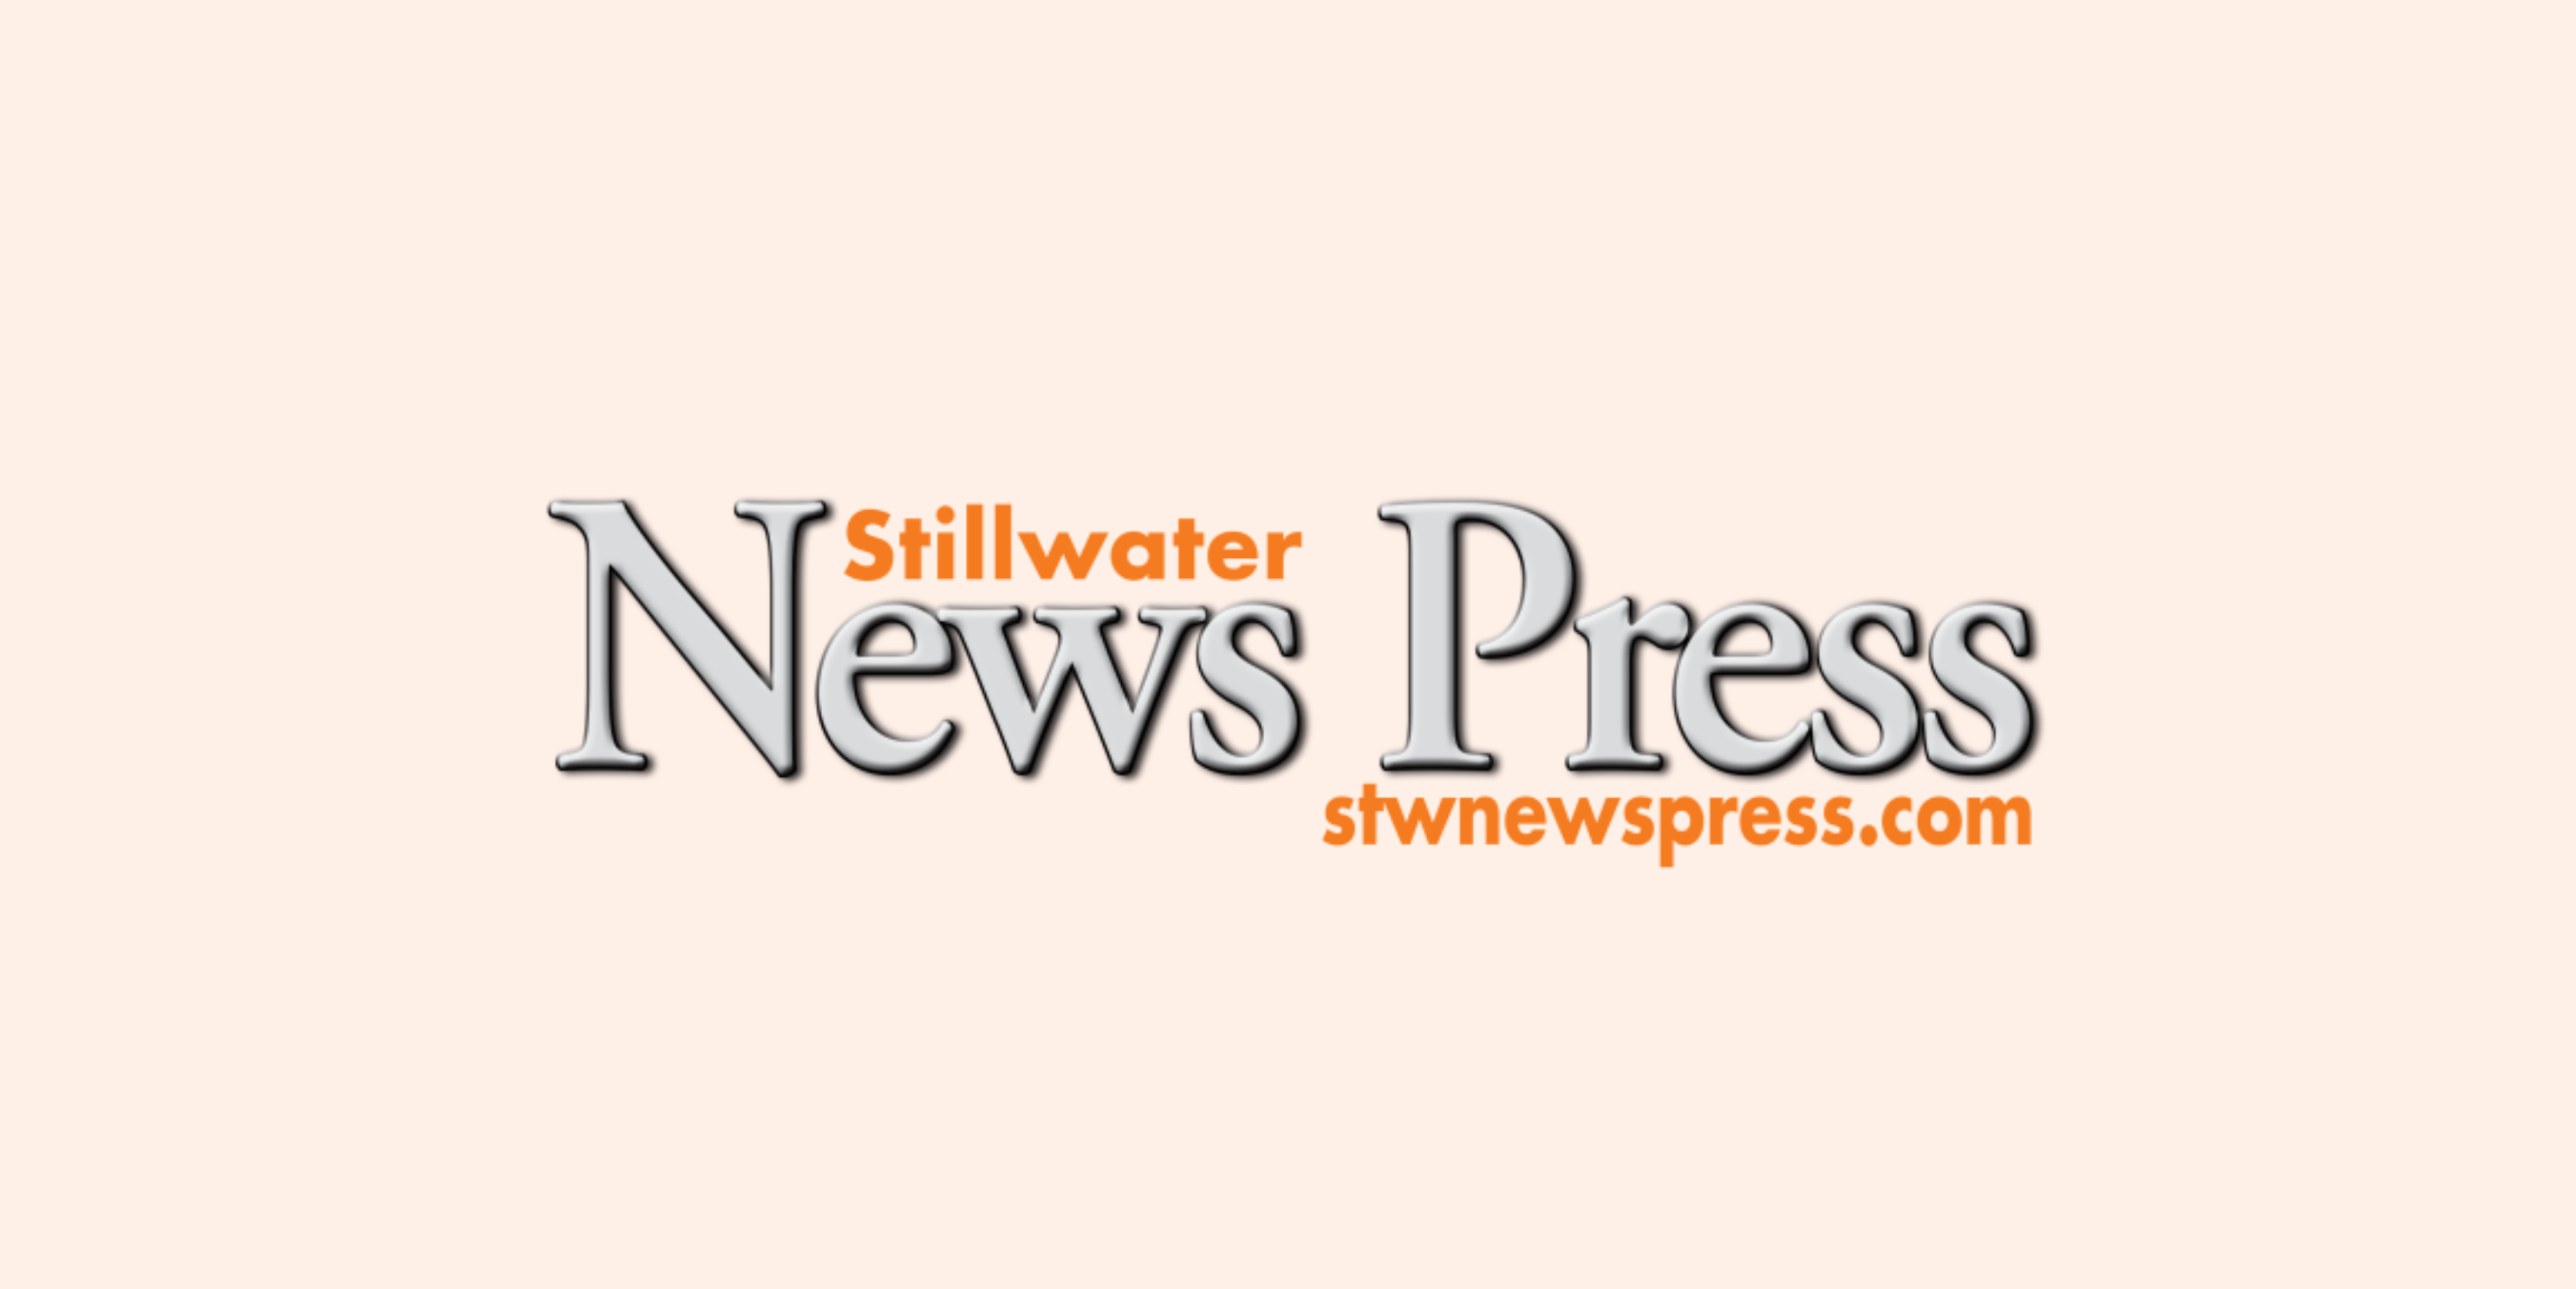 Stillwater News Press